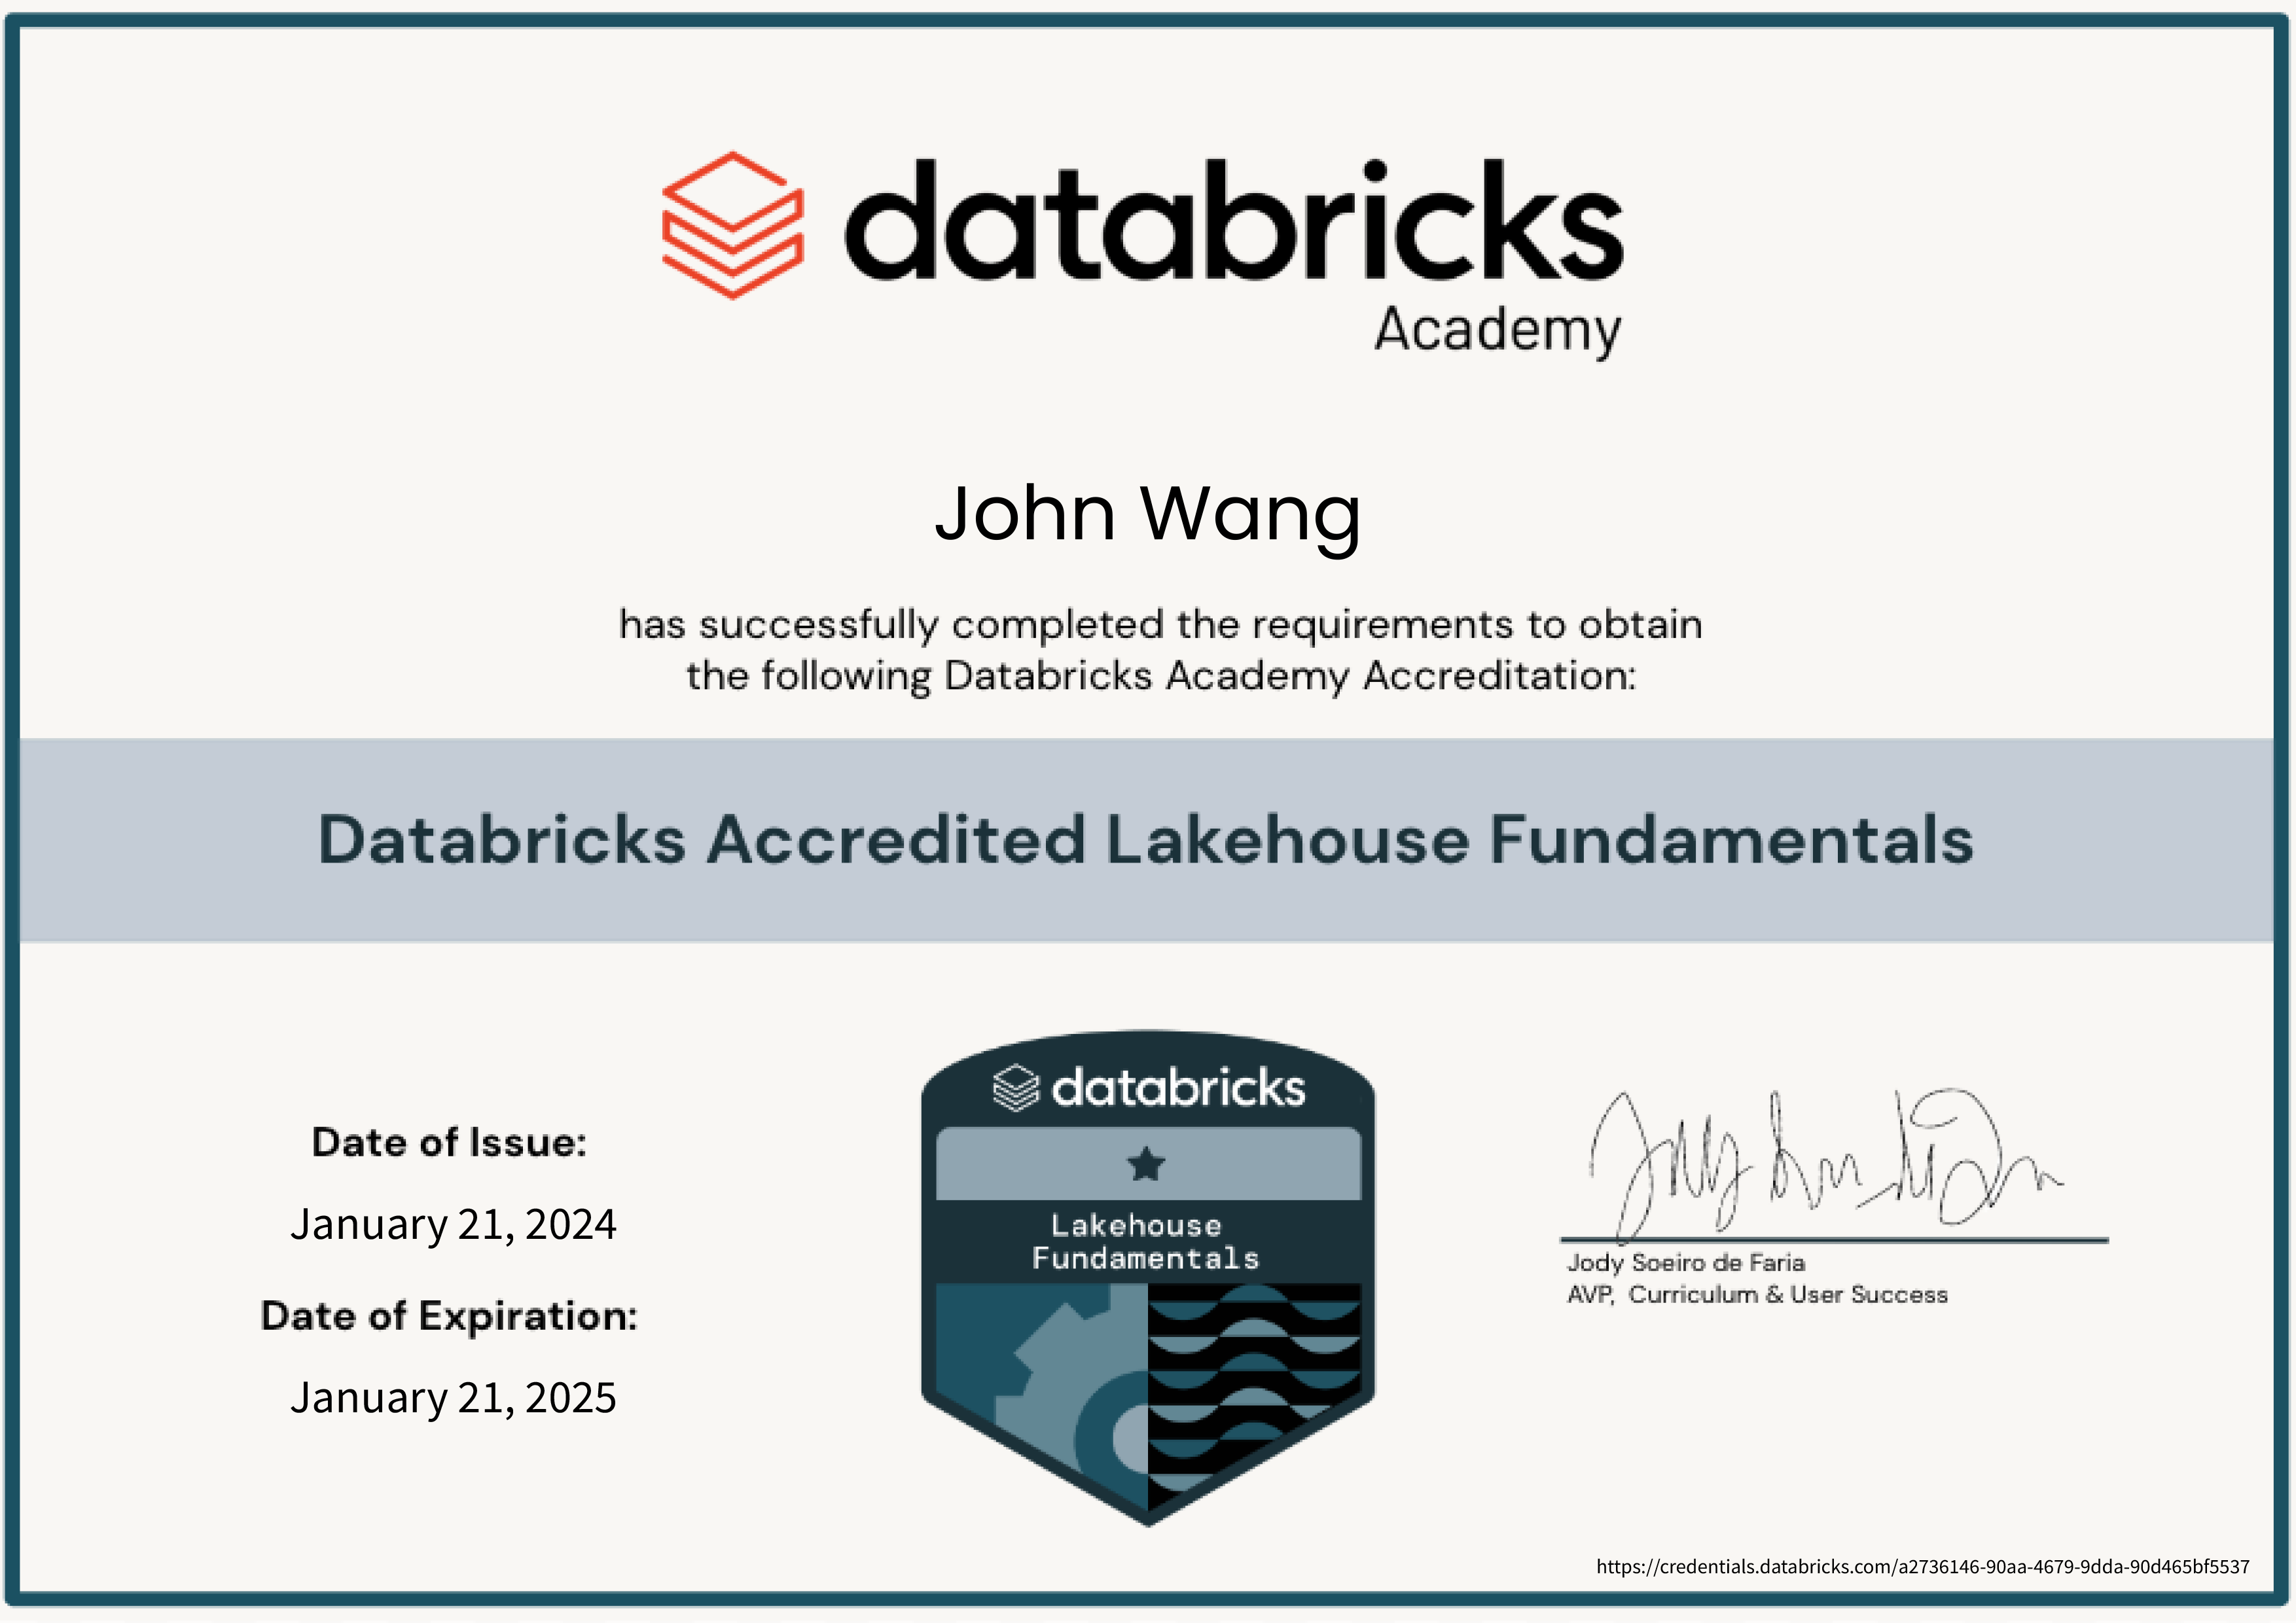 John's Databricks Accredited Lakehouse Fundamentals from Databricks